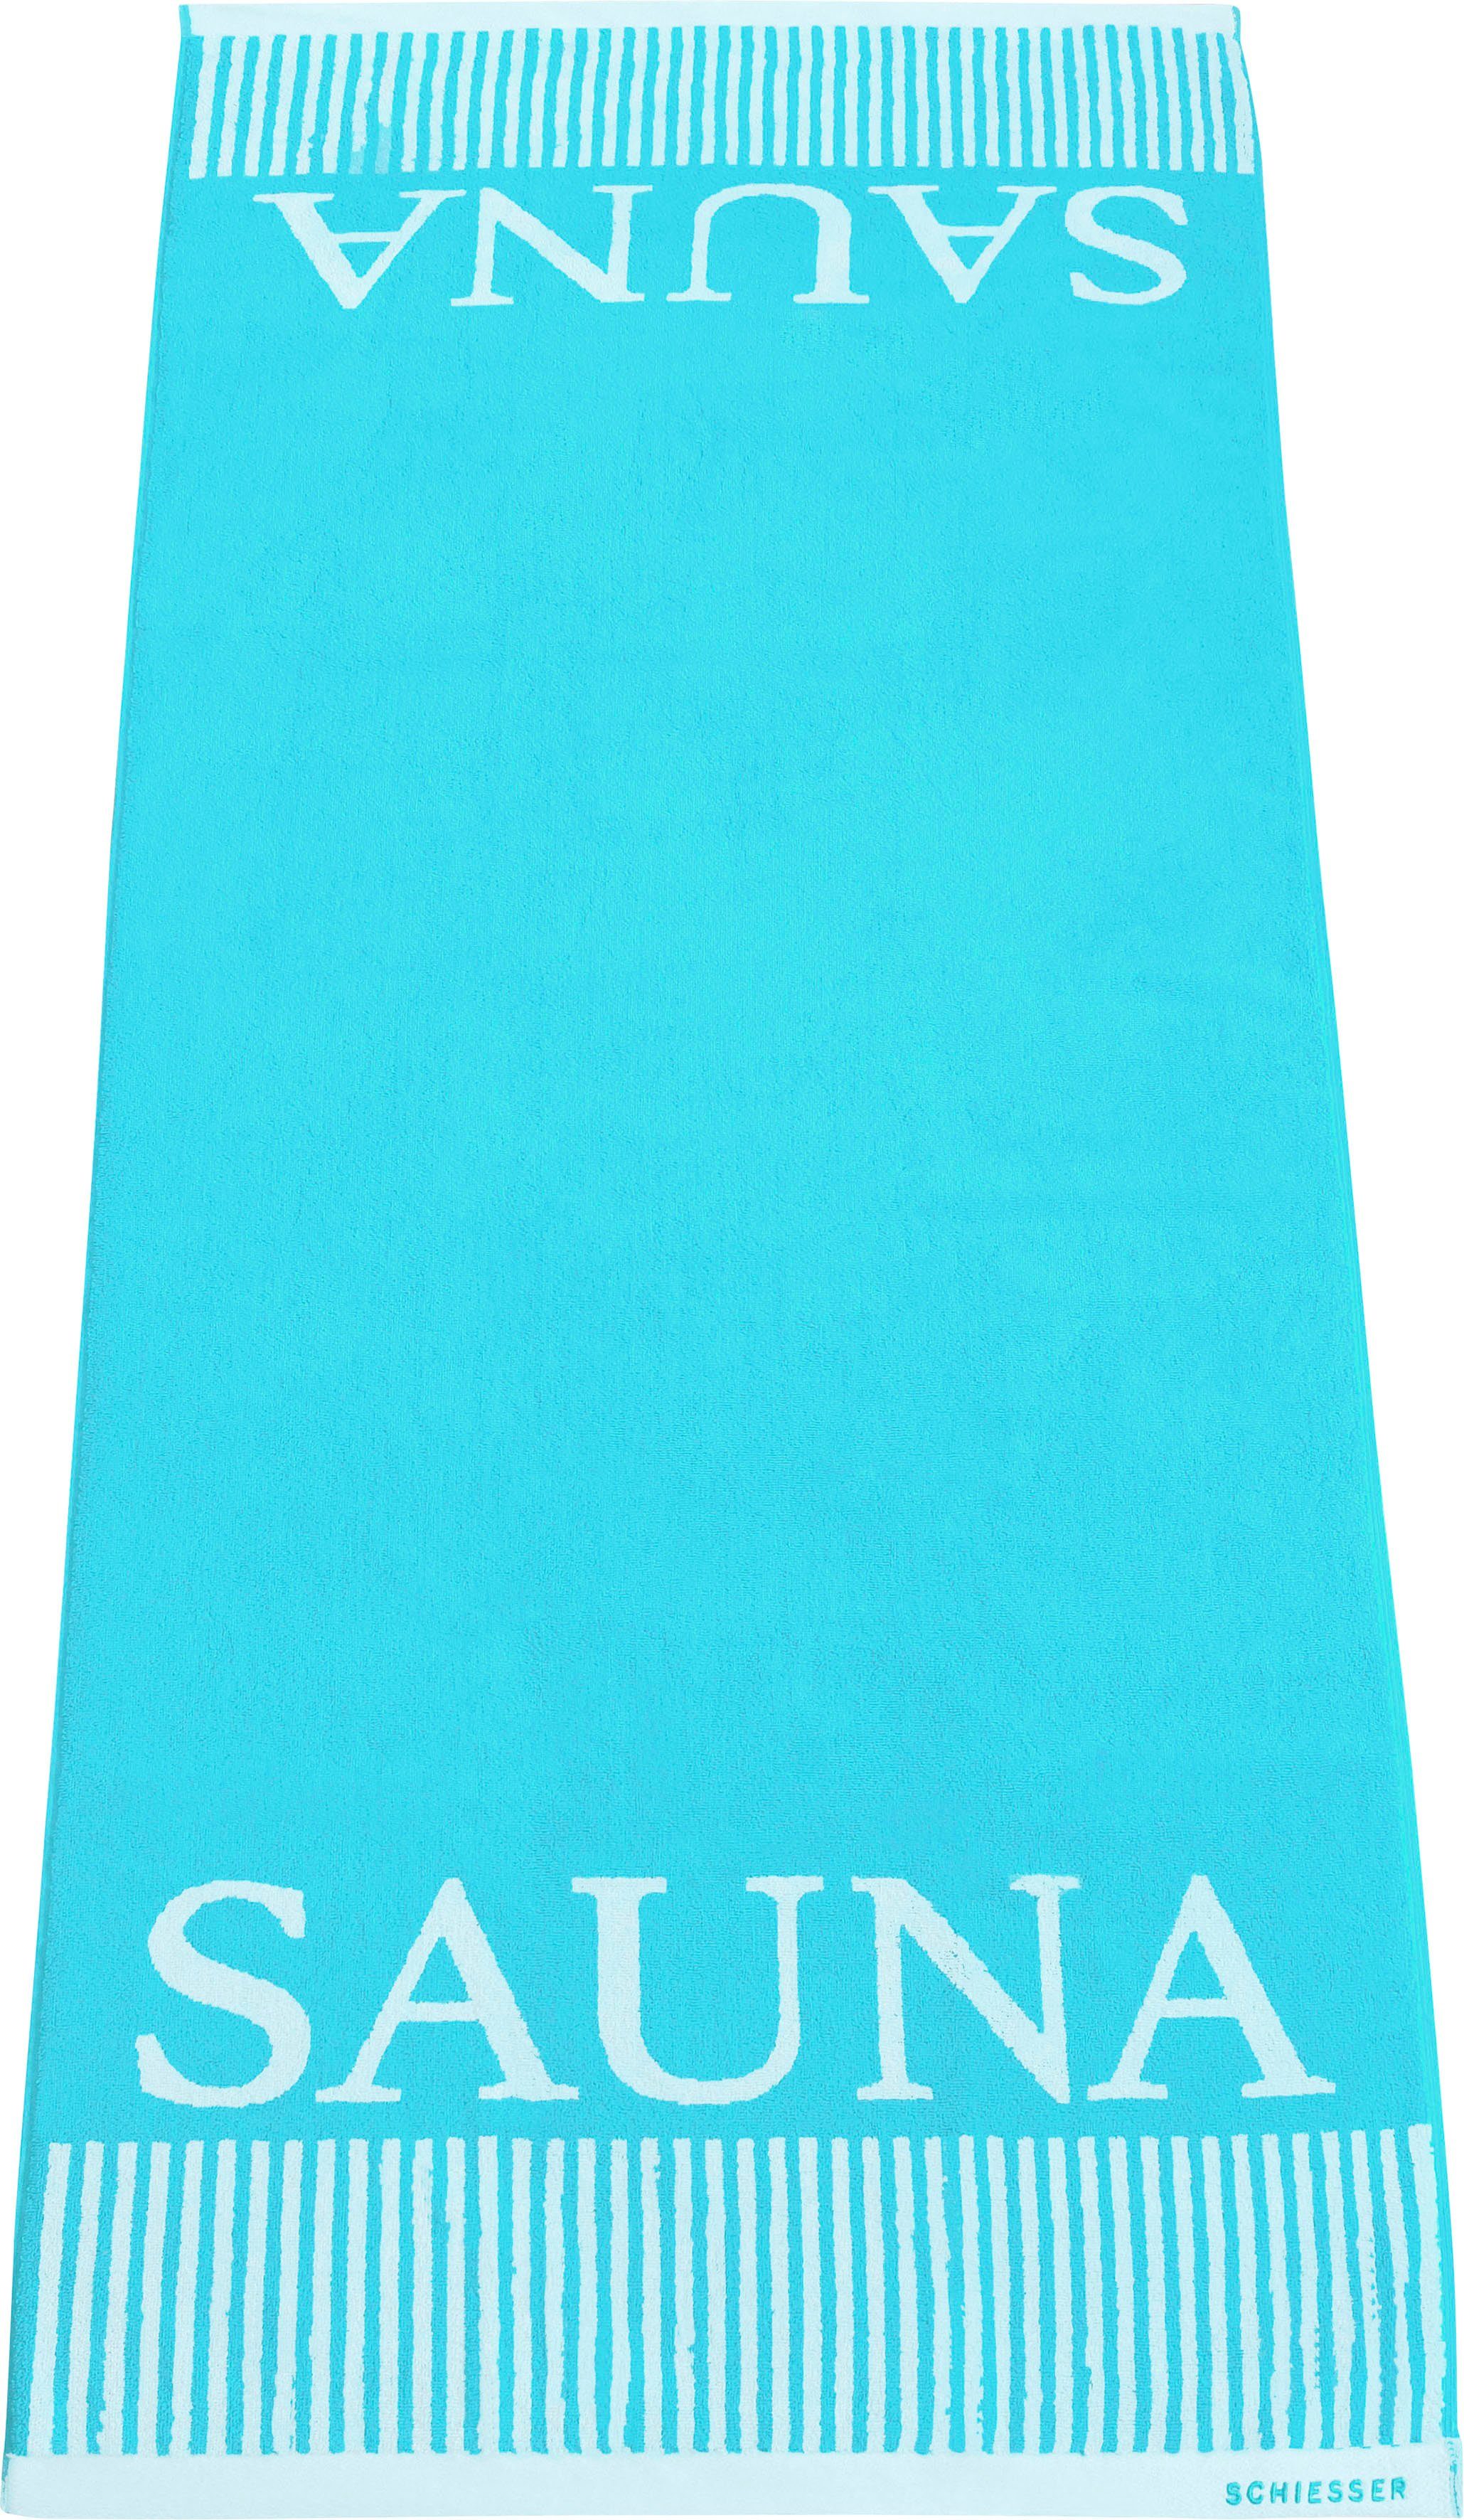 Schiesser (1-St), Sauna-Aufschrift Frottier Rom, Saunatuch